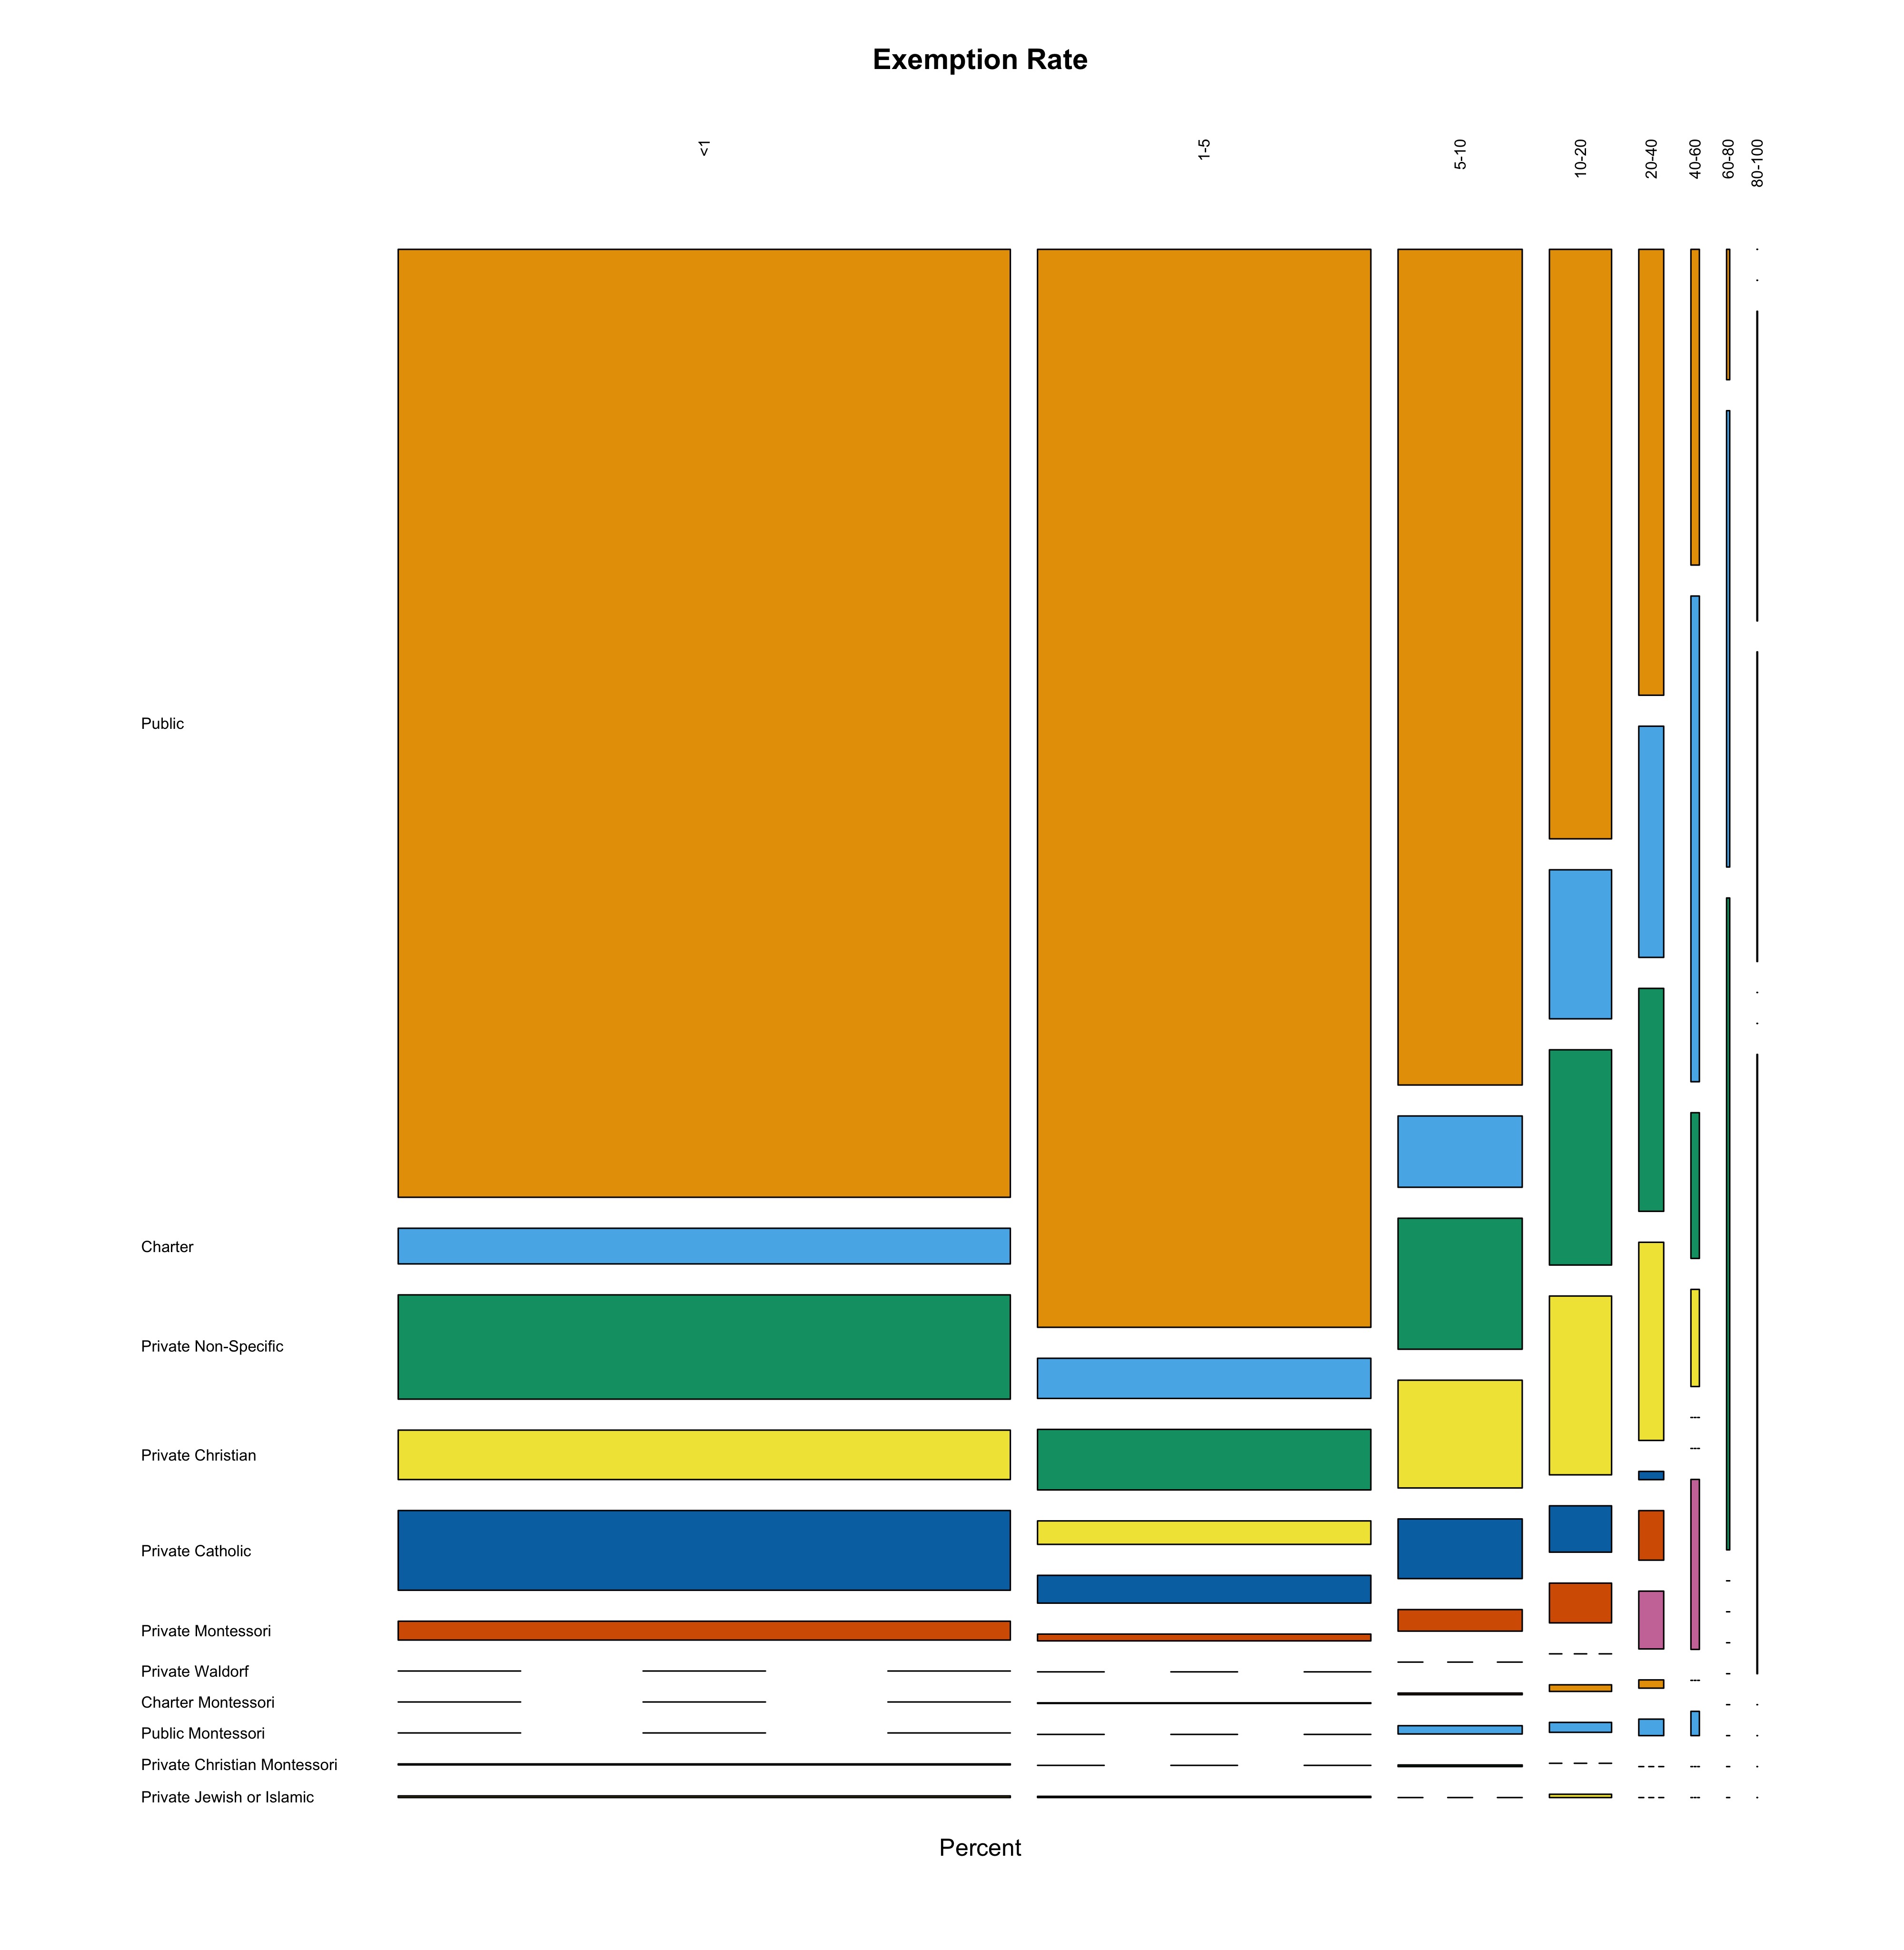 Mosaic Plot of California Kindergarten PBE Rates by School Type, 2014-2015